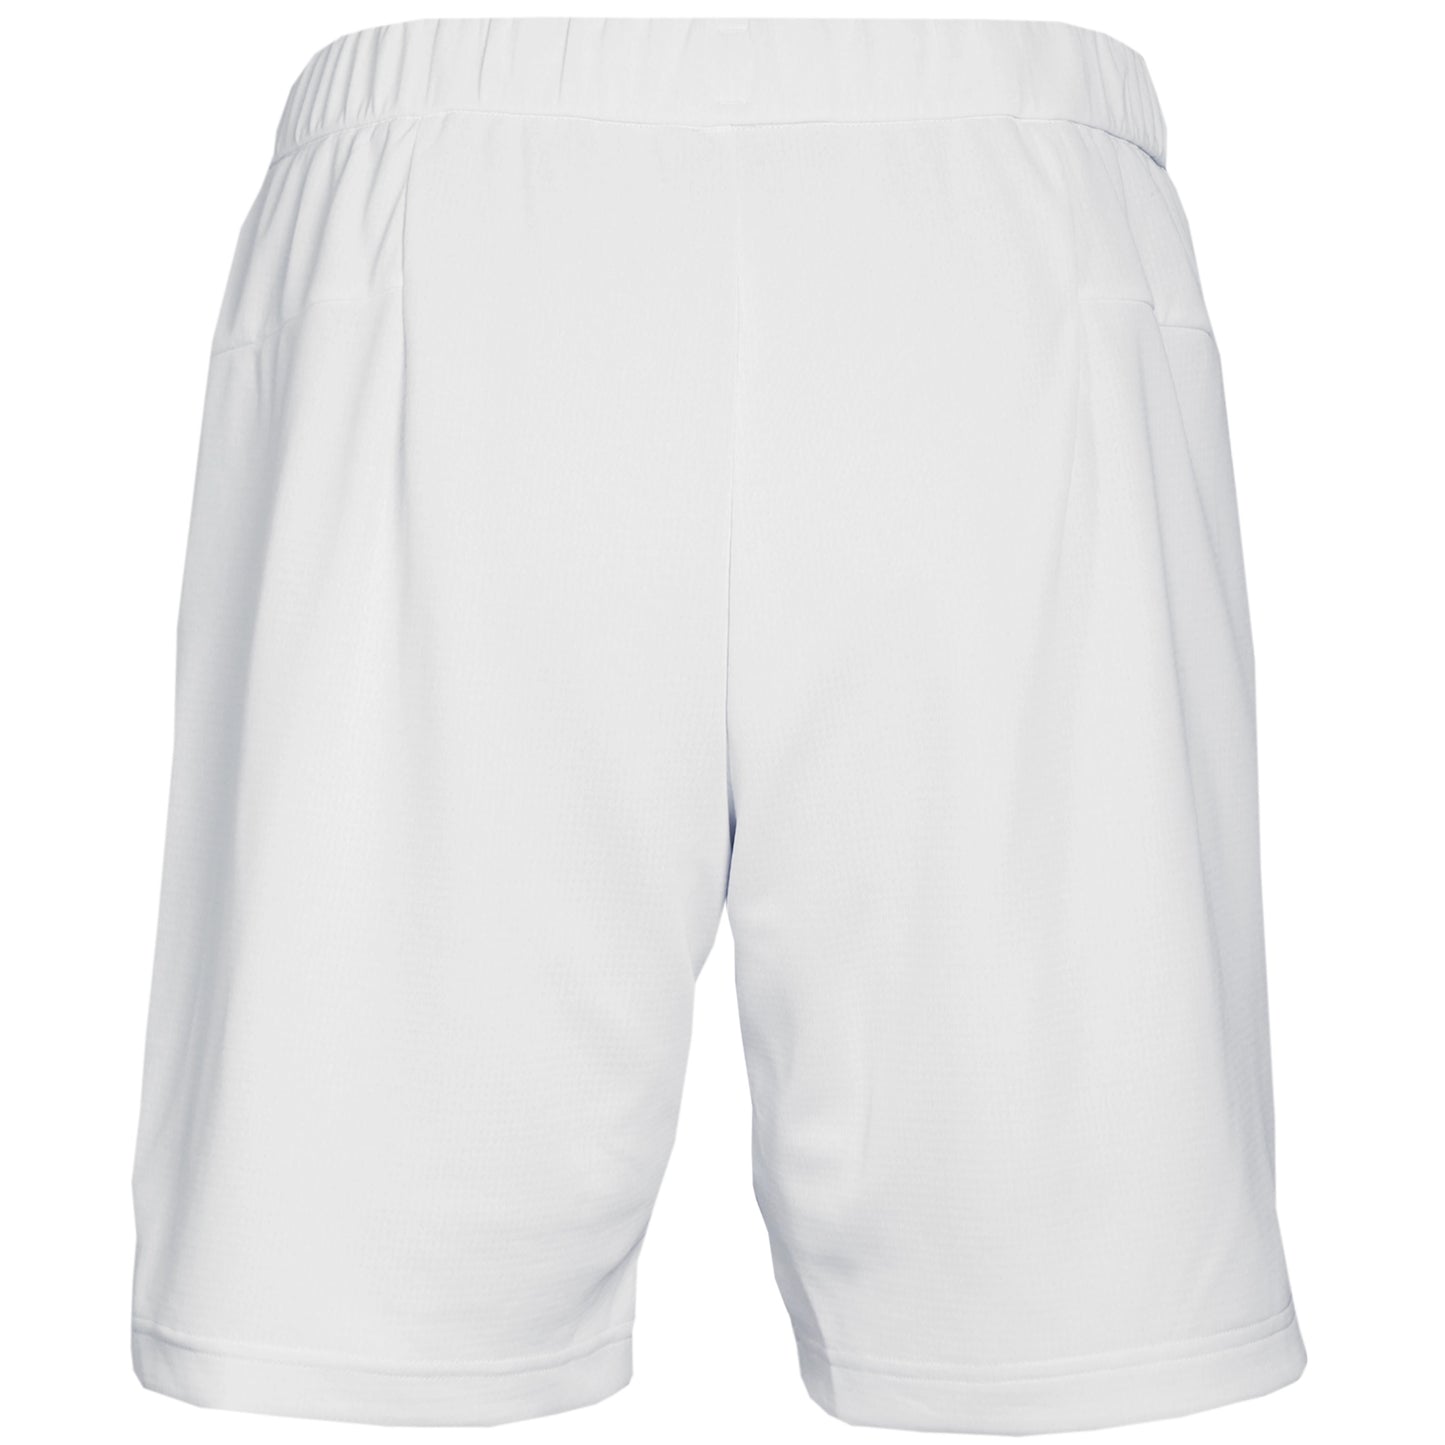 Yonex Men's Badminton Short White (15114)